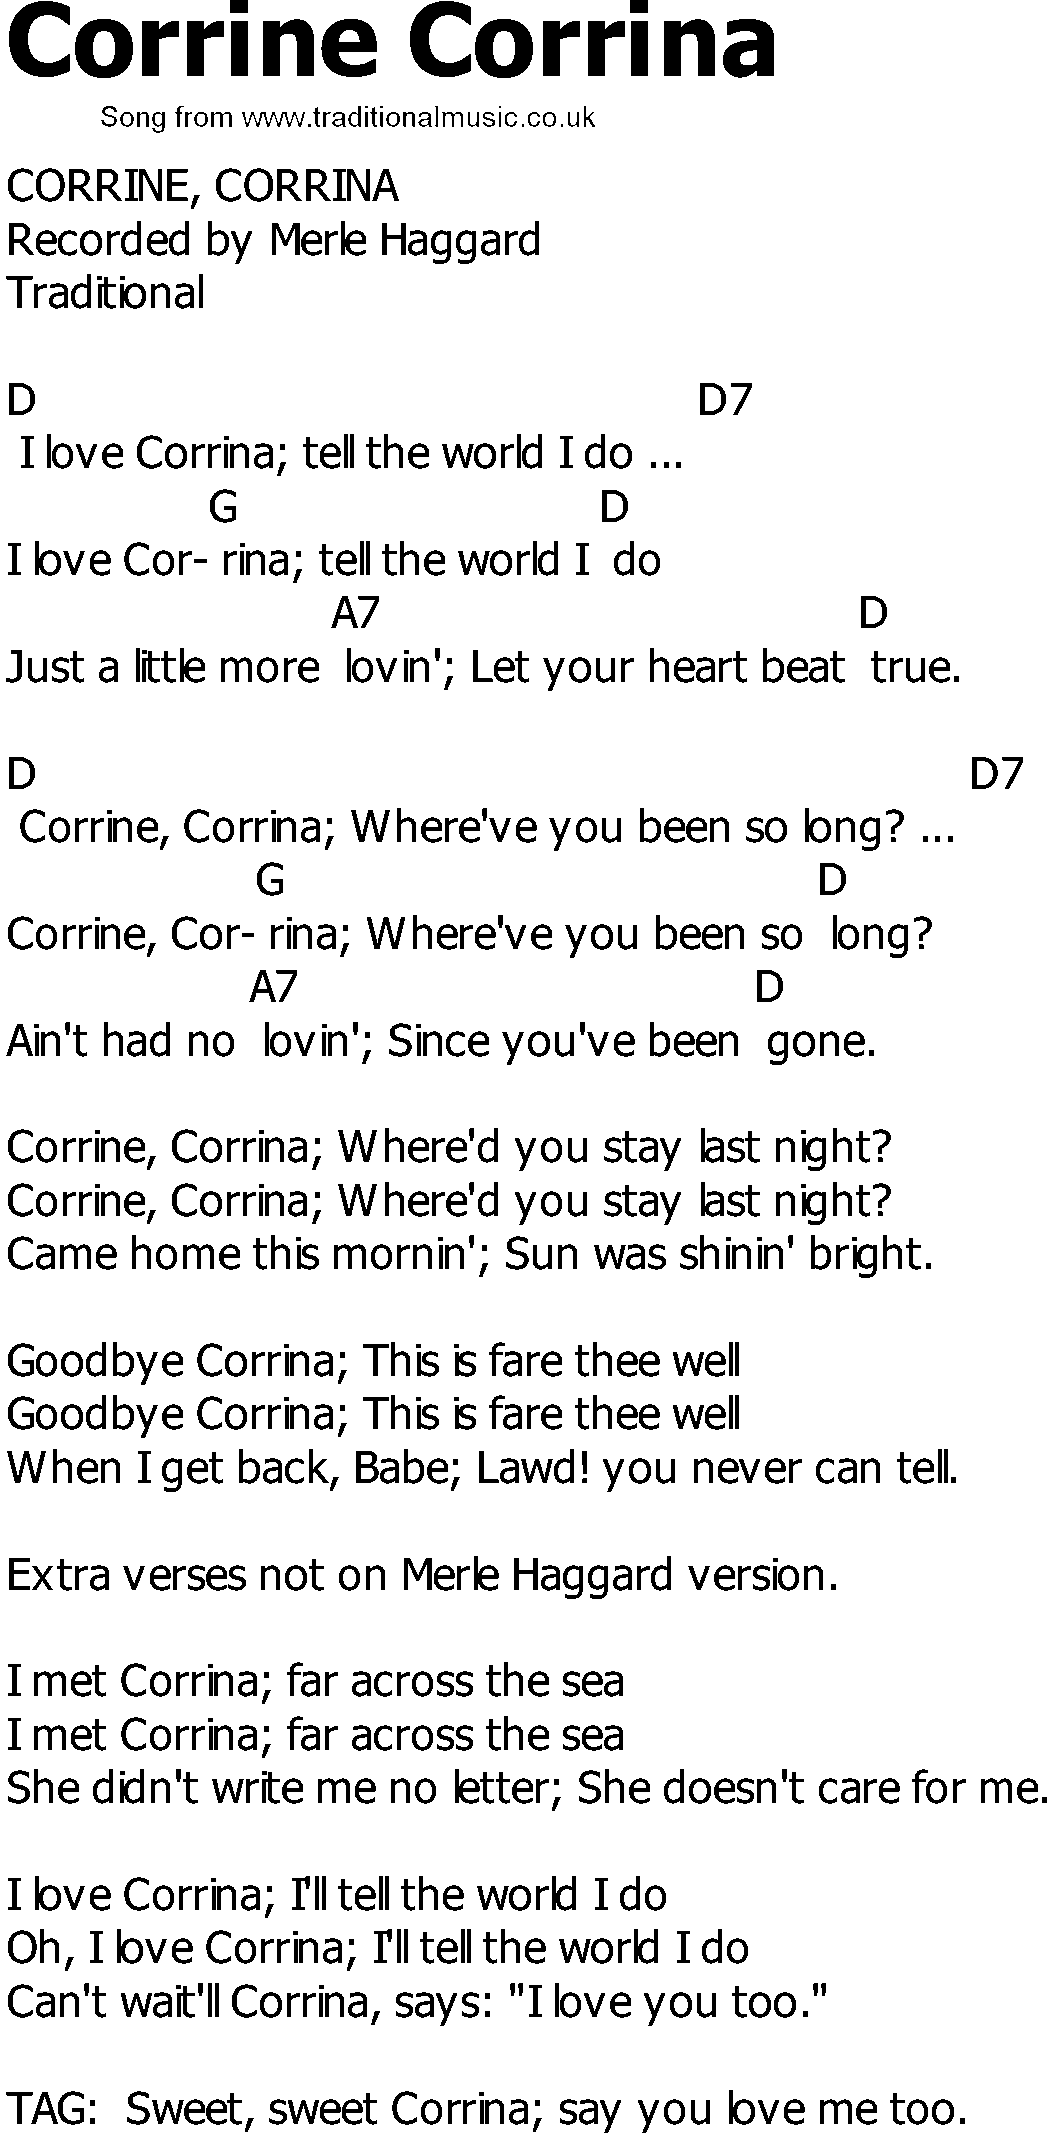 Old Country song lyrics with chords - Corrine Corrina